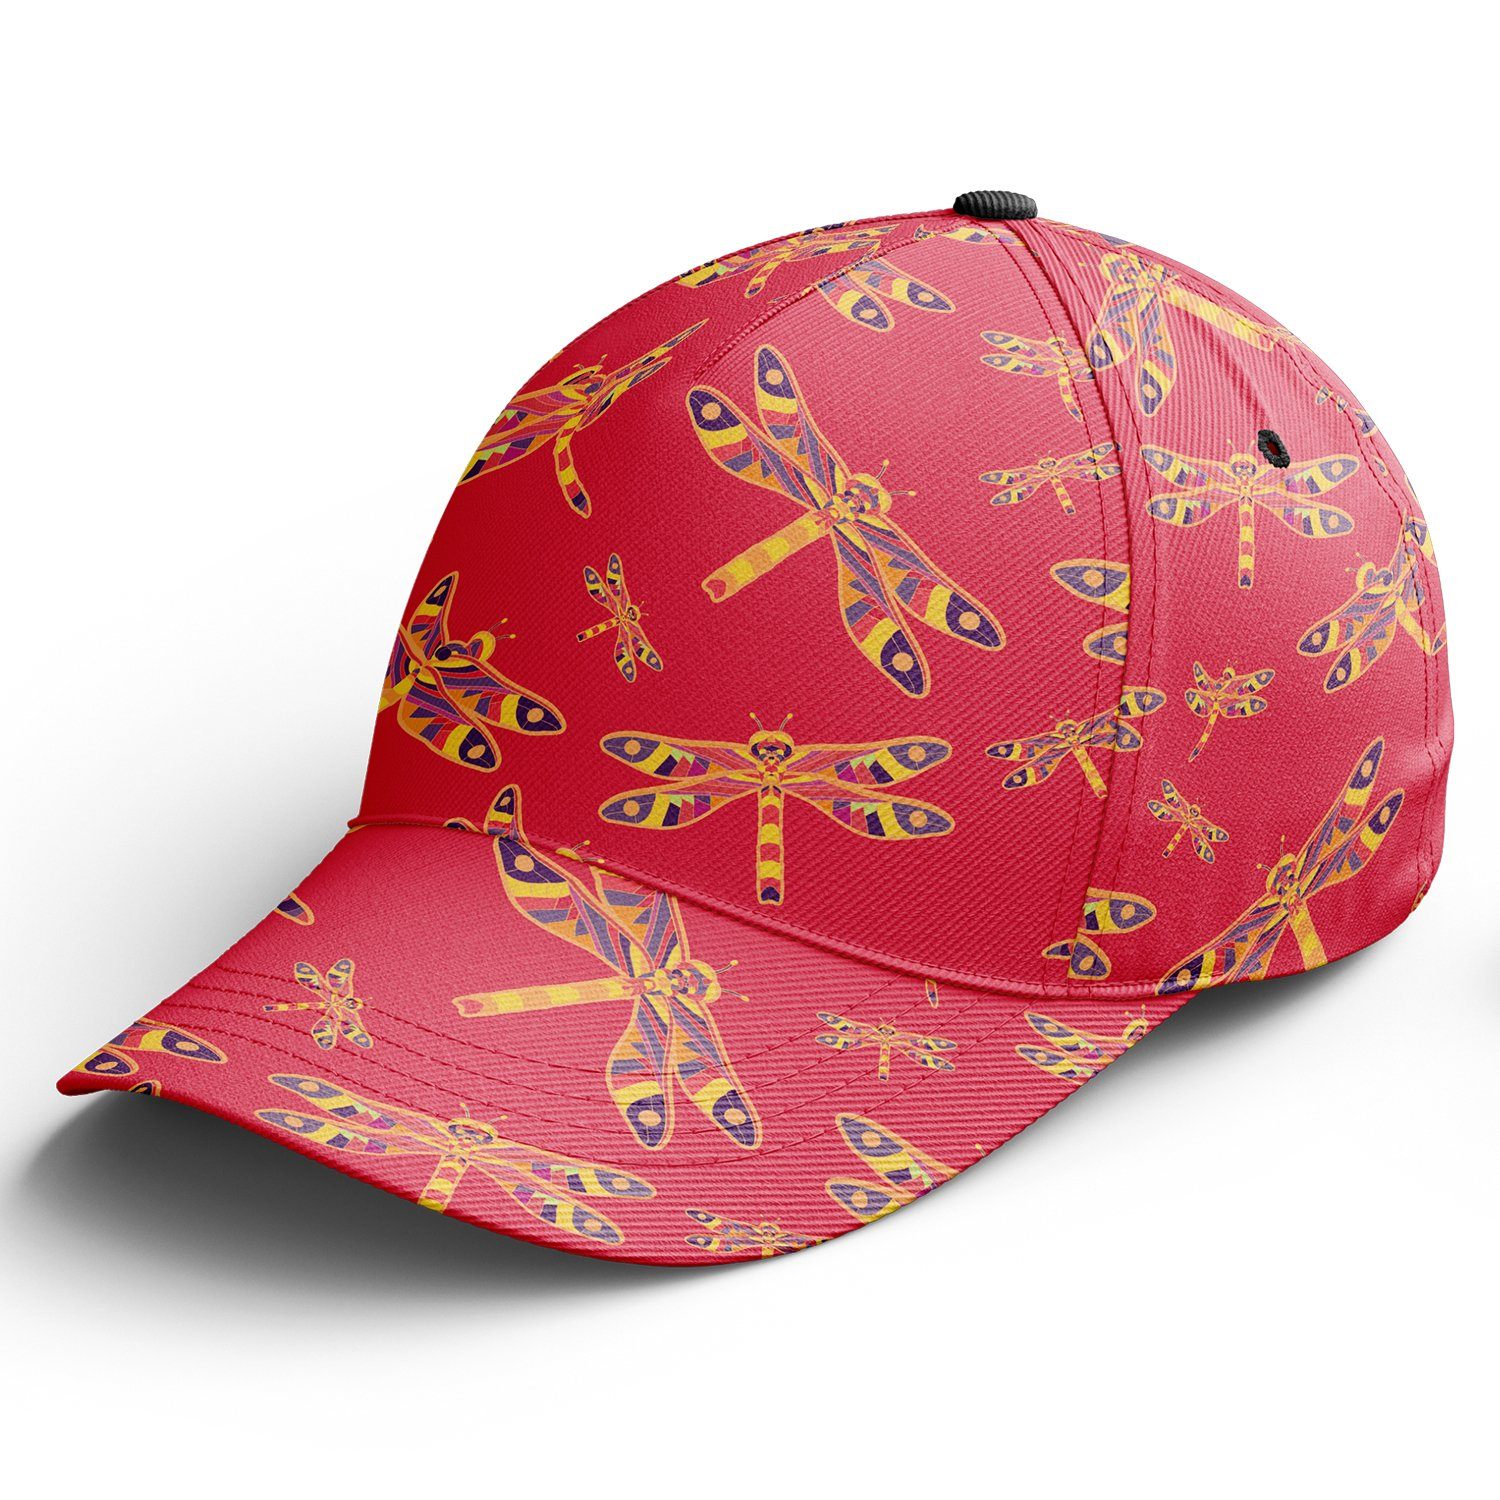 Gathering Rouge Snapback Hat hat Herman 